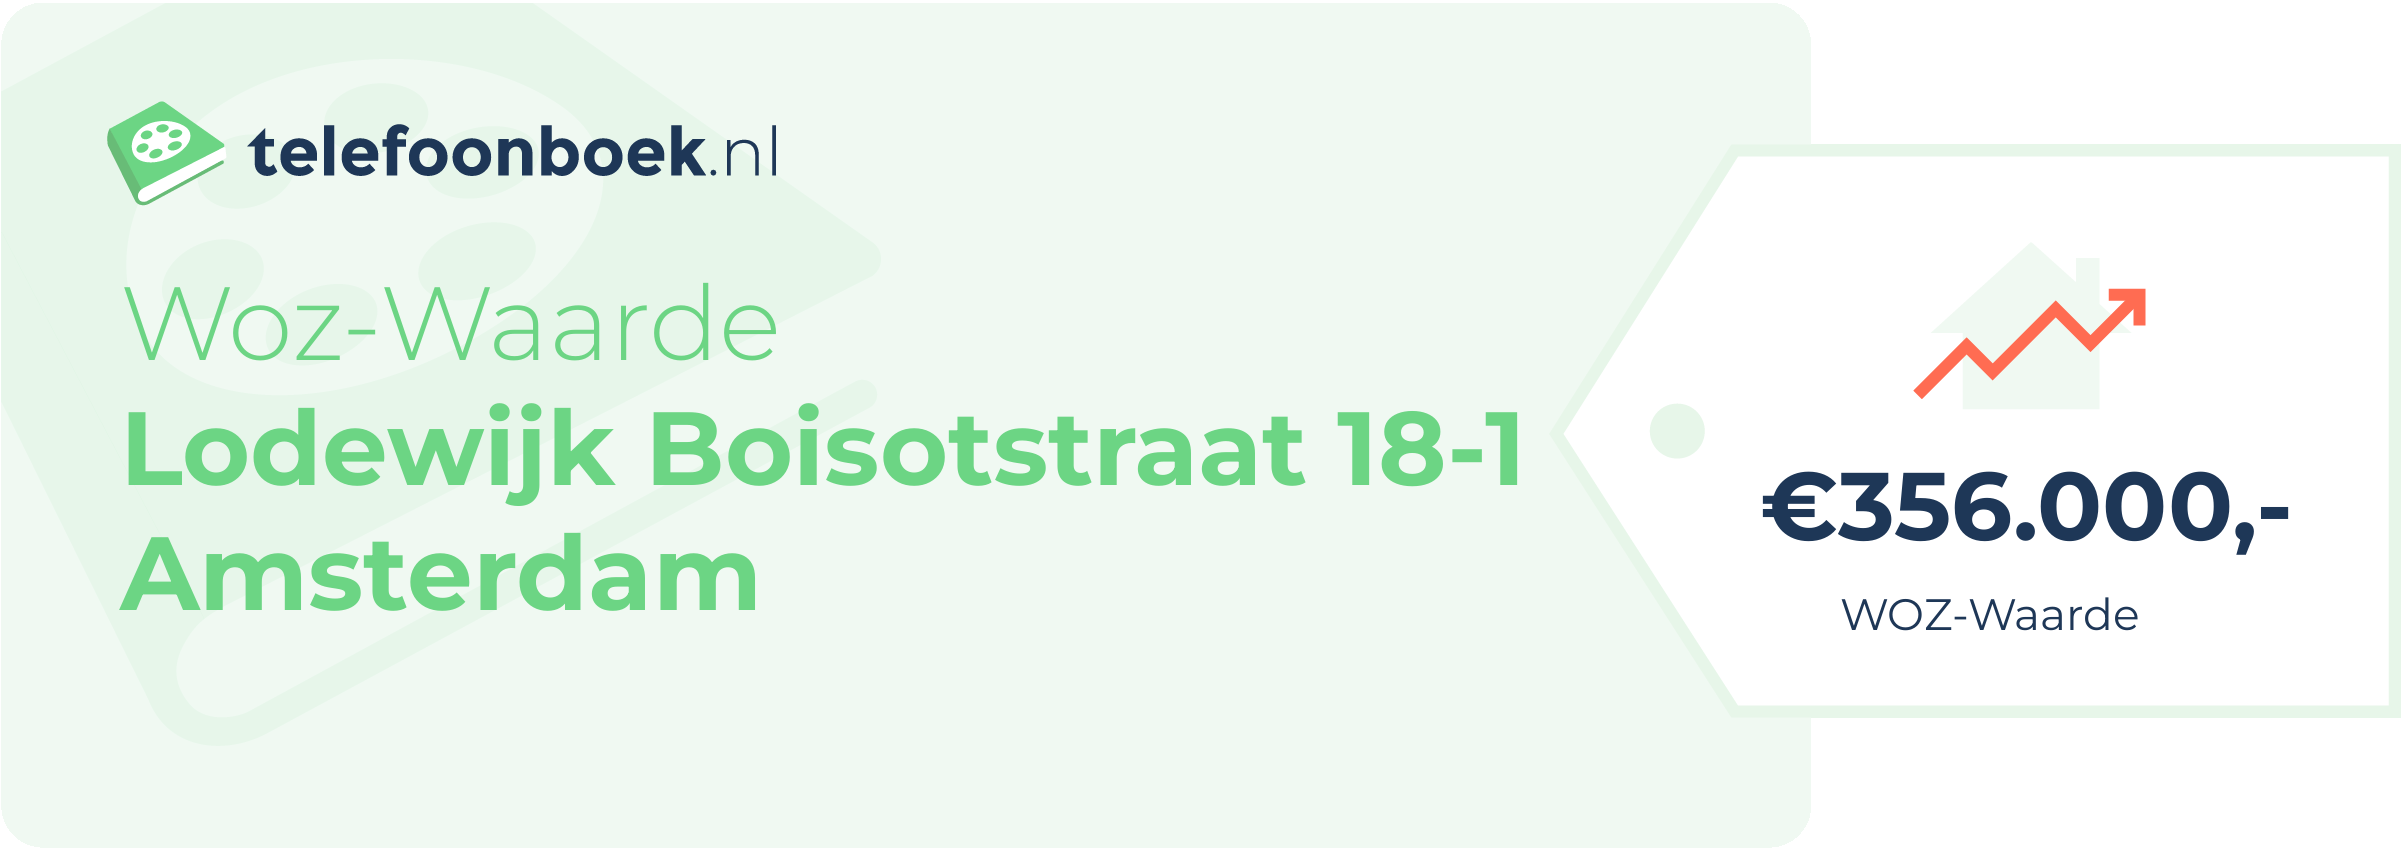 WOZ-waarde Lodewijk Boisotstraat 18-1 Amsterdam